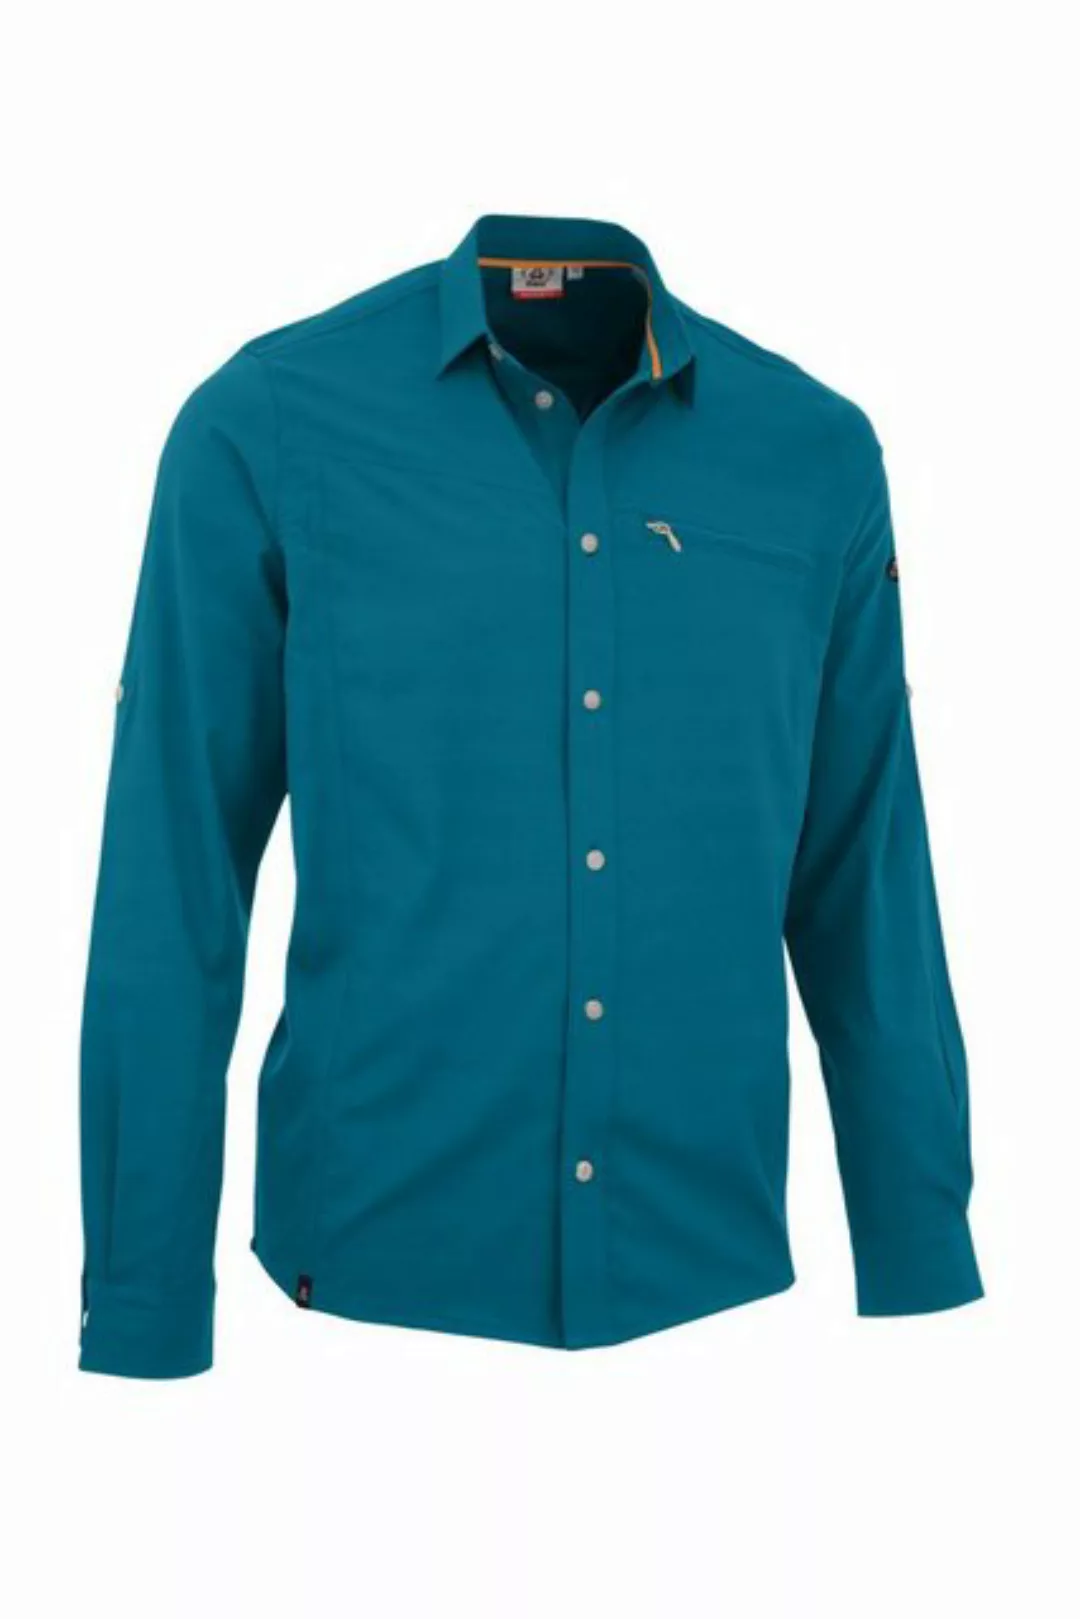 Maul Sport® Outdoorhemd Maul Herren Lechnerkopf 1/1-1/1 Hemd elastic günstig online kaufen